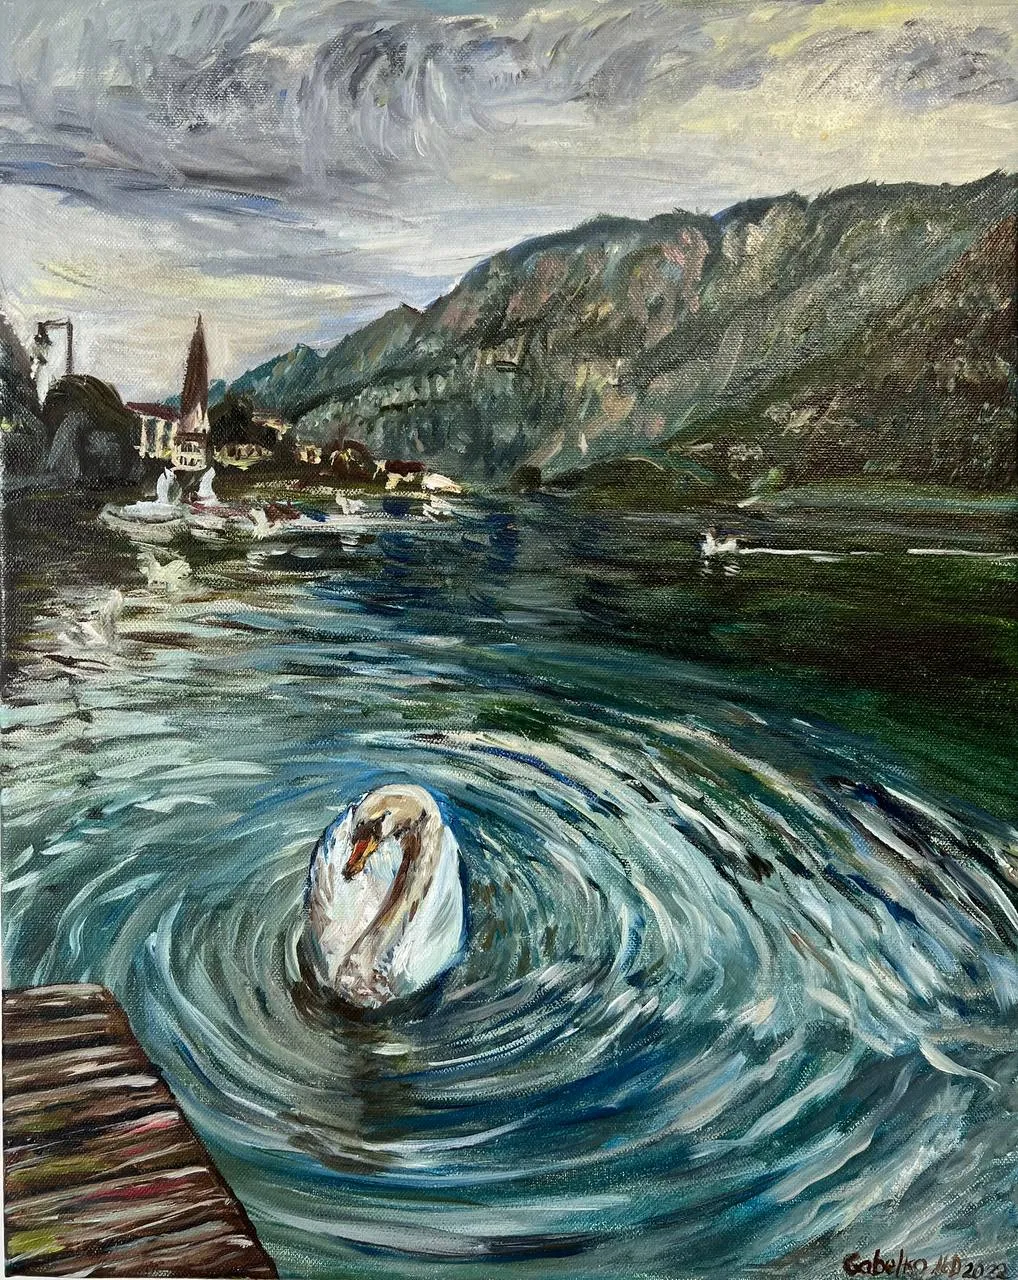 Swan lake in Hallstatt